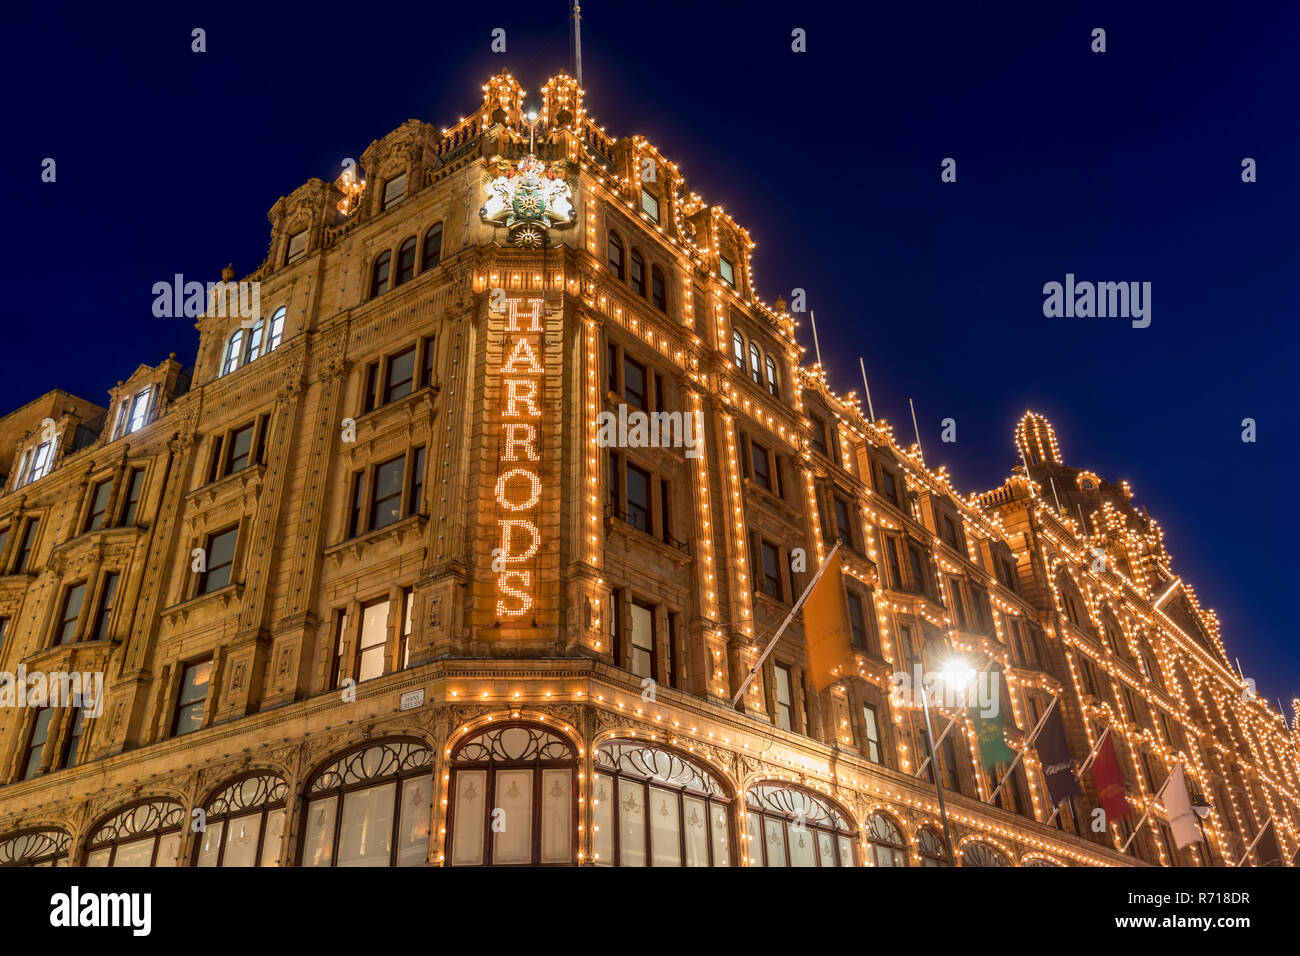 Illuminated department store Harrods, night scene, London, Great Britain Stock Photo